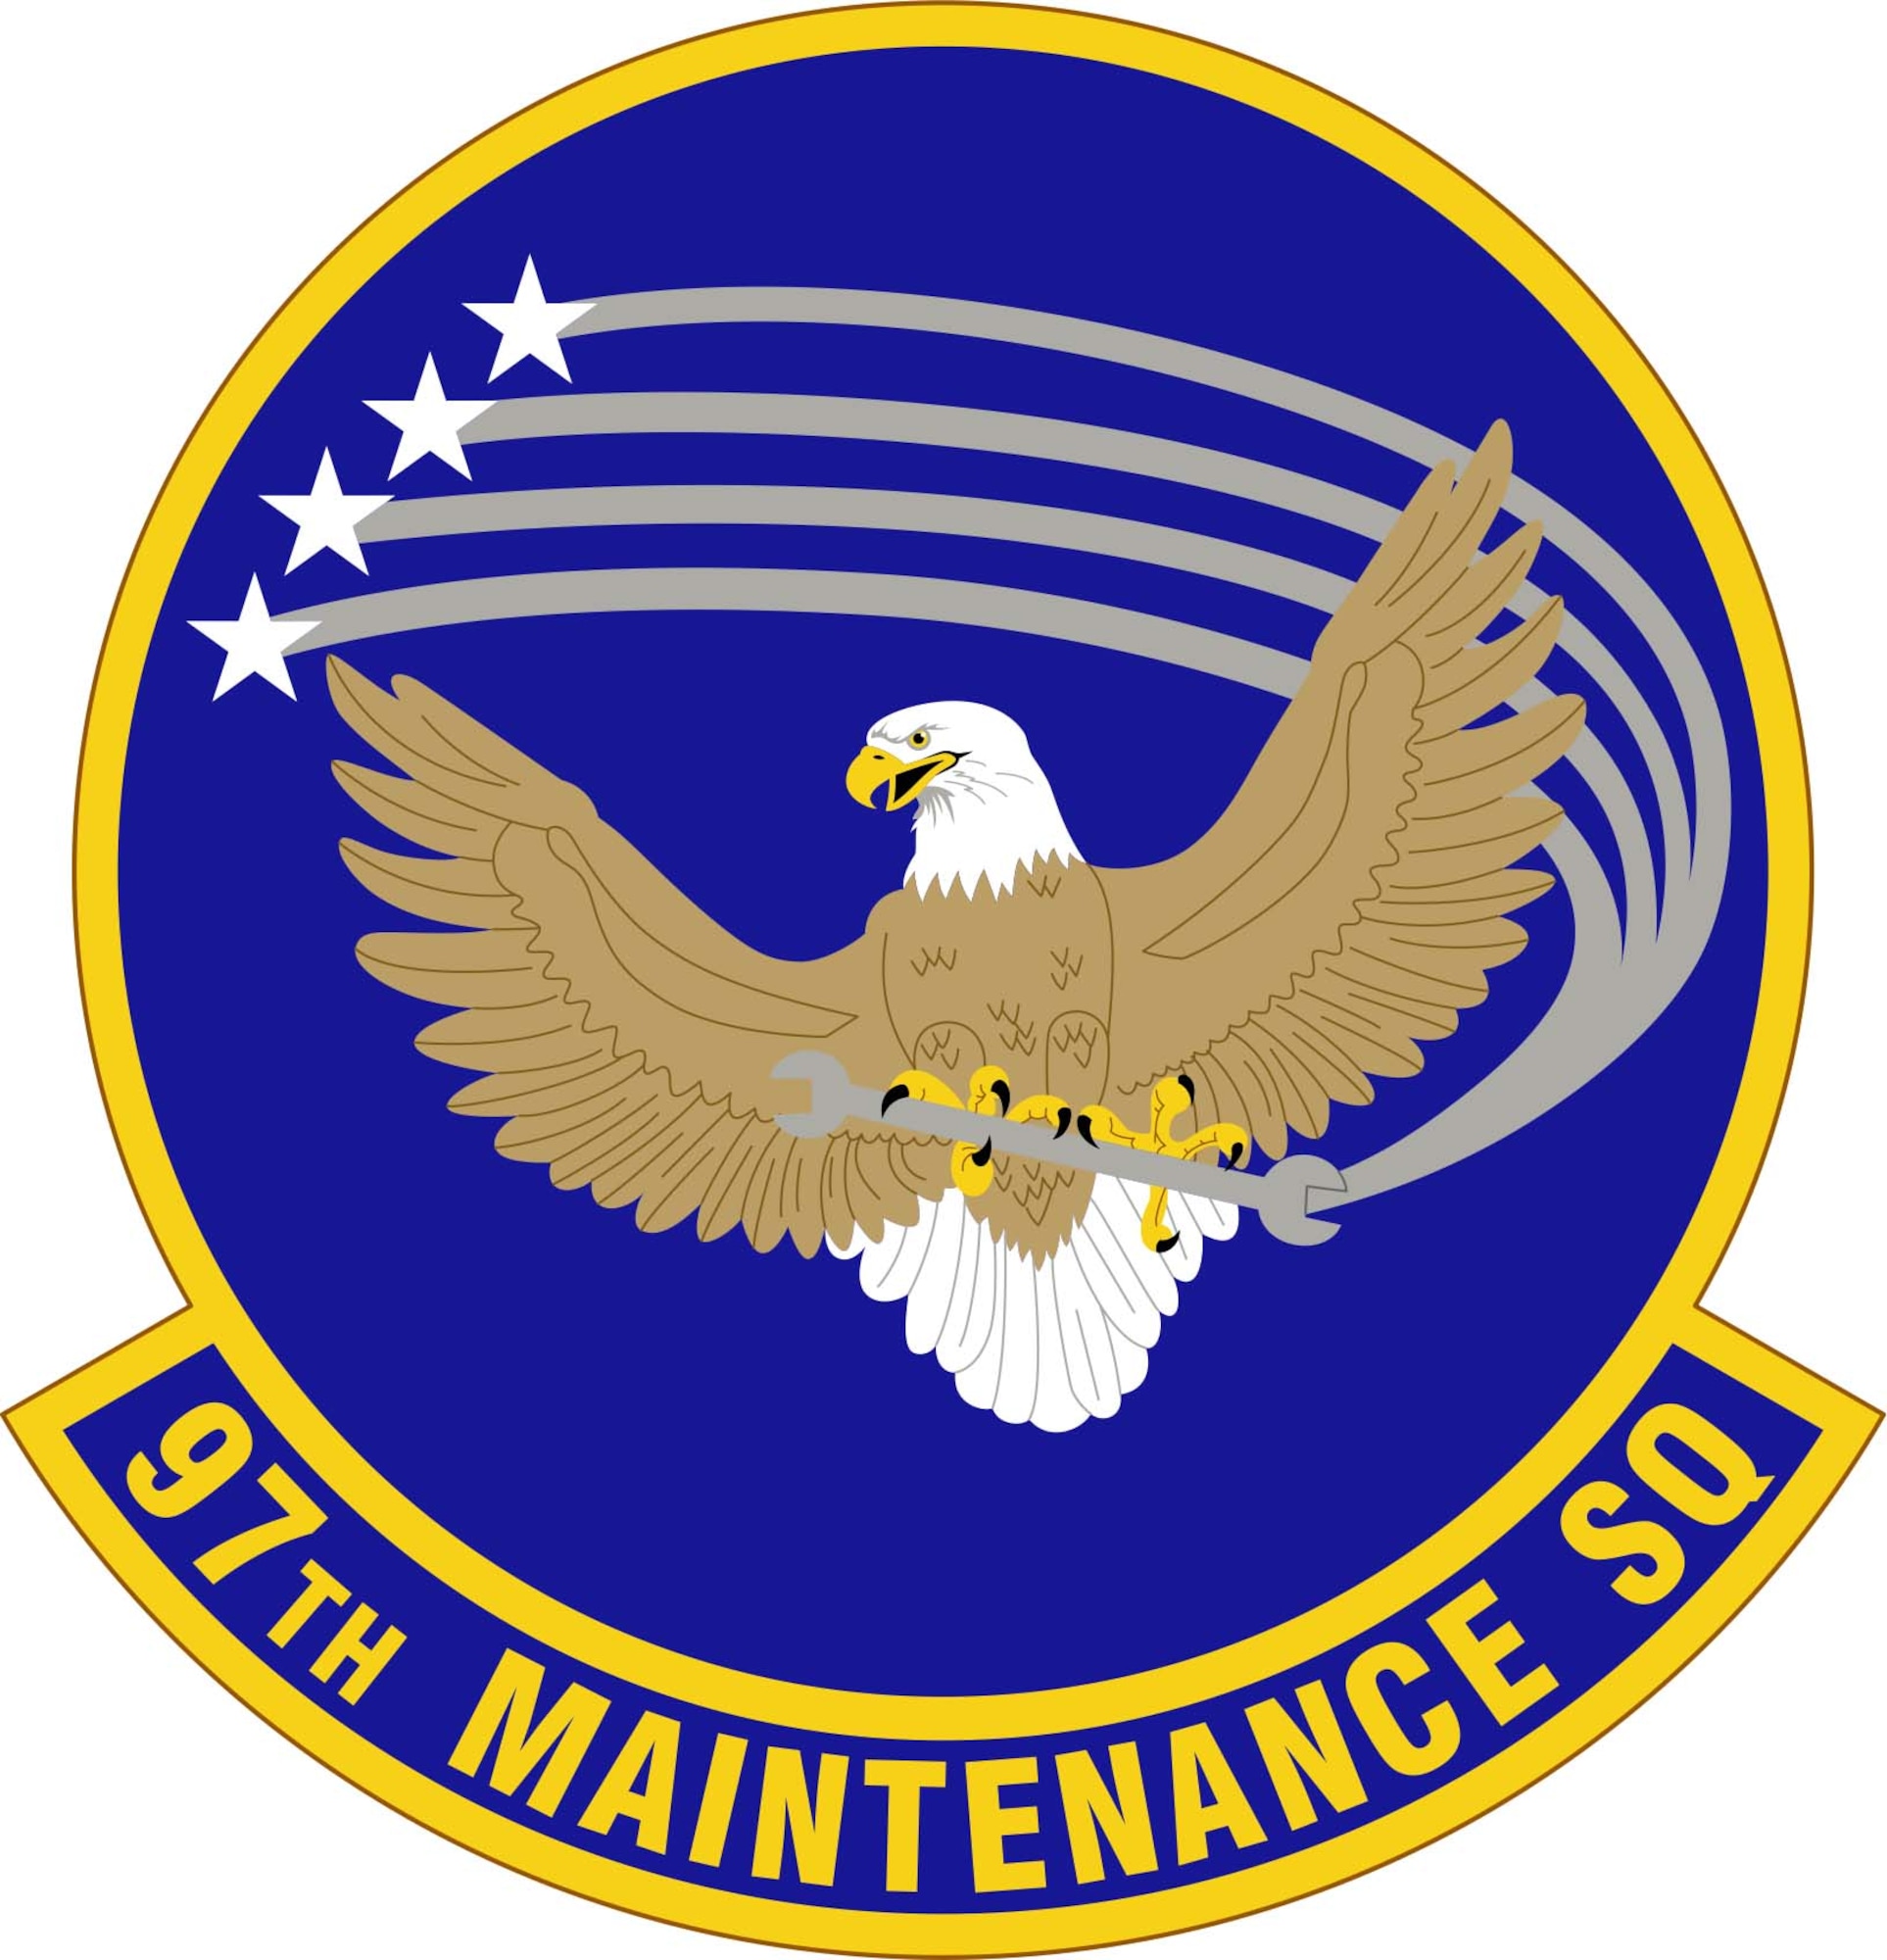 97th Maintenance Squadron.